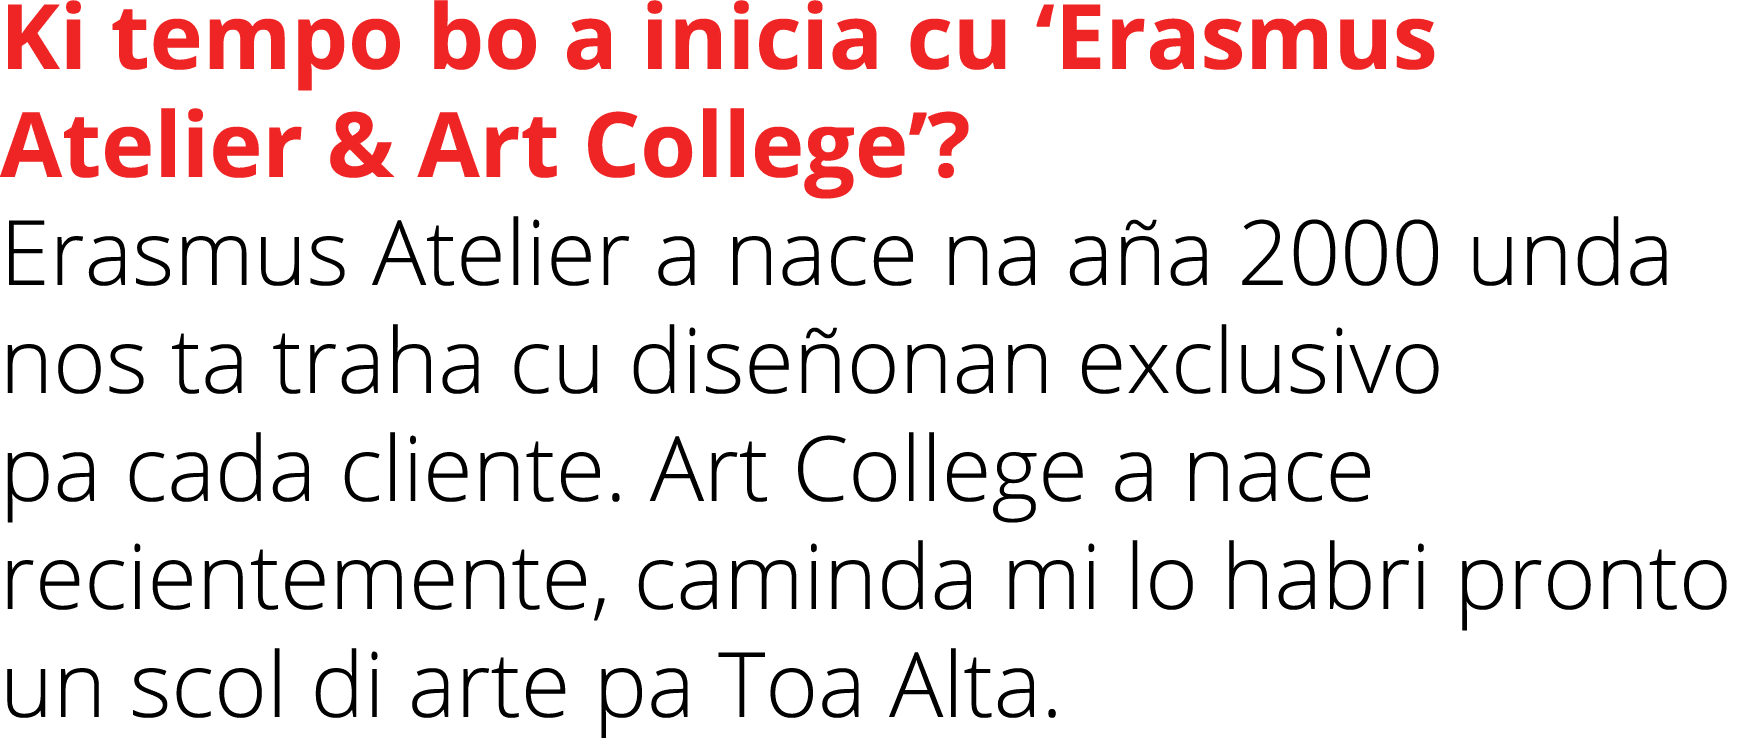 Ki tempo bo a inicia cu ‘Erasmus Atelier & Art College’? Erasmus Atelier a nace na a a 2000 unda nos ta traha cu dise...